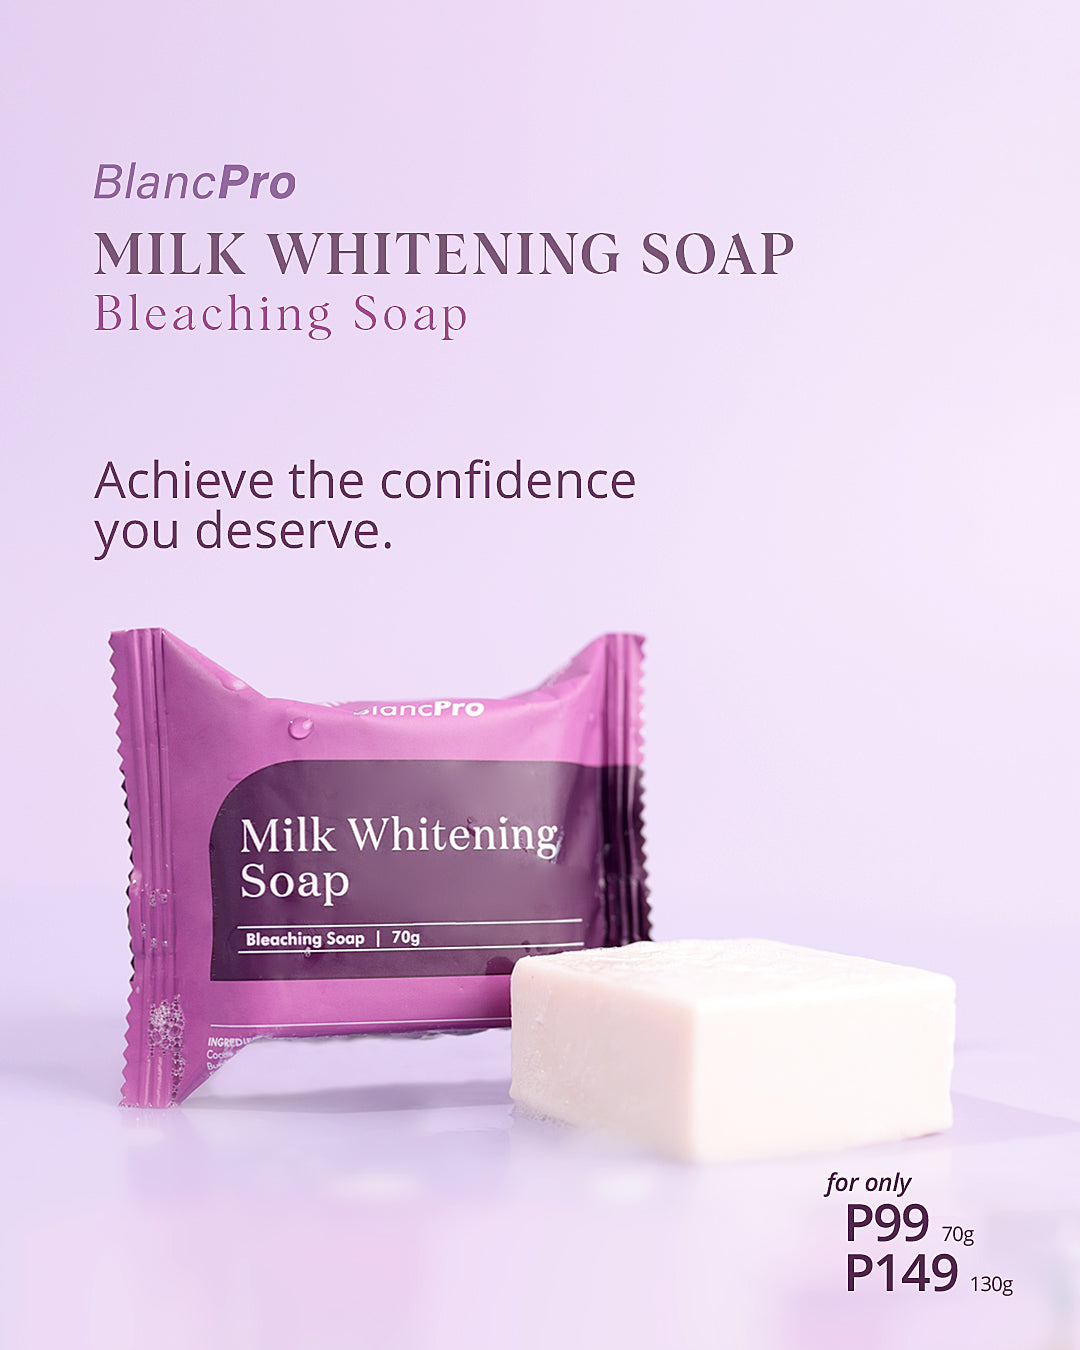 Blancpro Milk Whitening Soap Bleaching SoapBlanc Pro